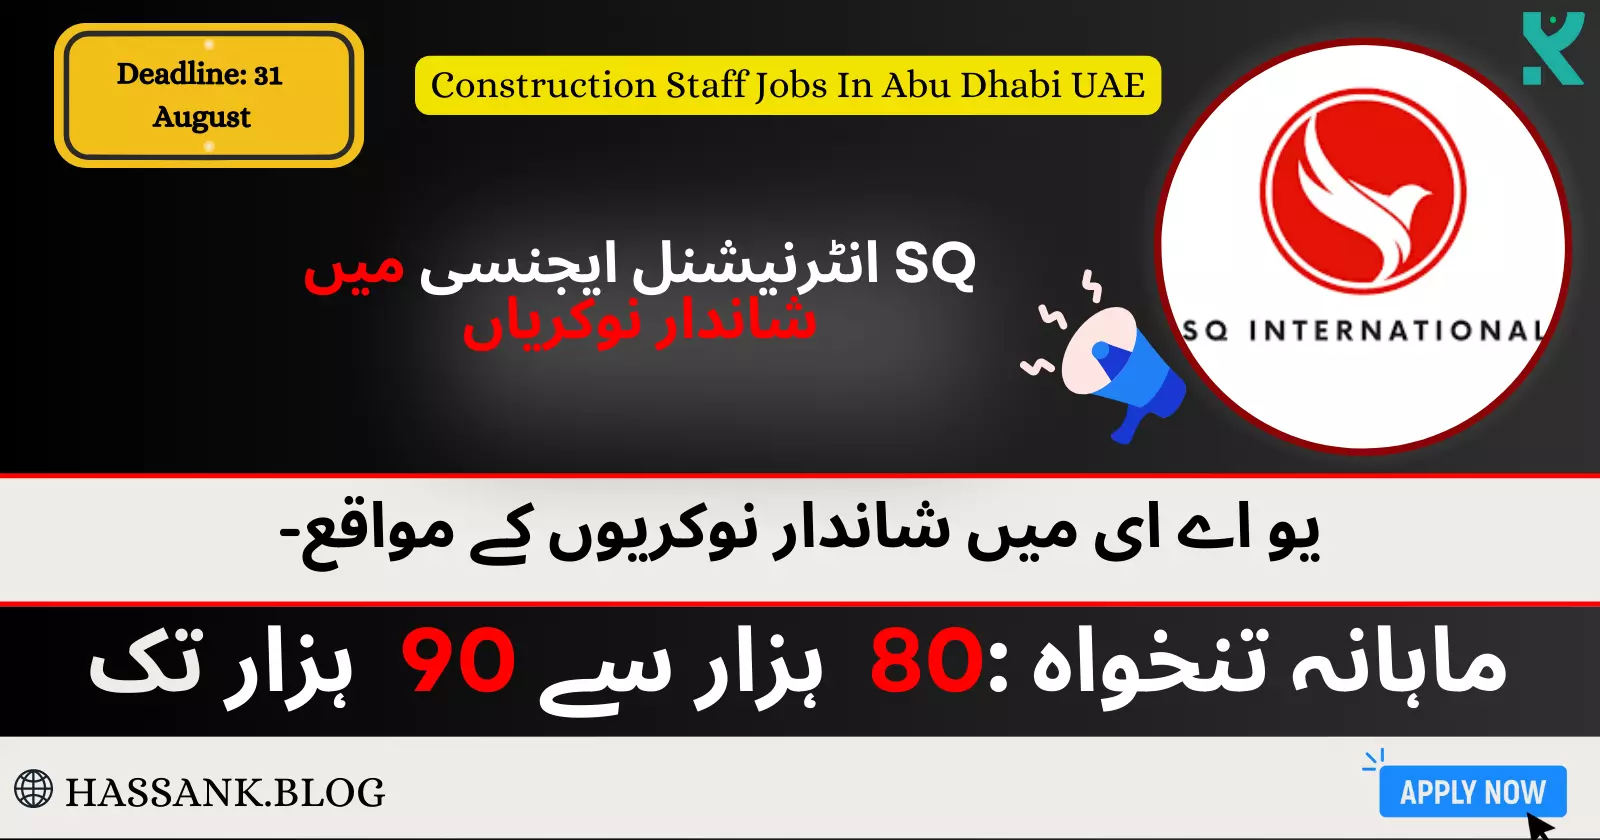 Construction Staff Jobs In Abu Dhabi